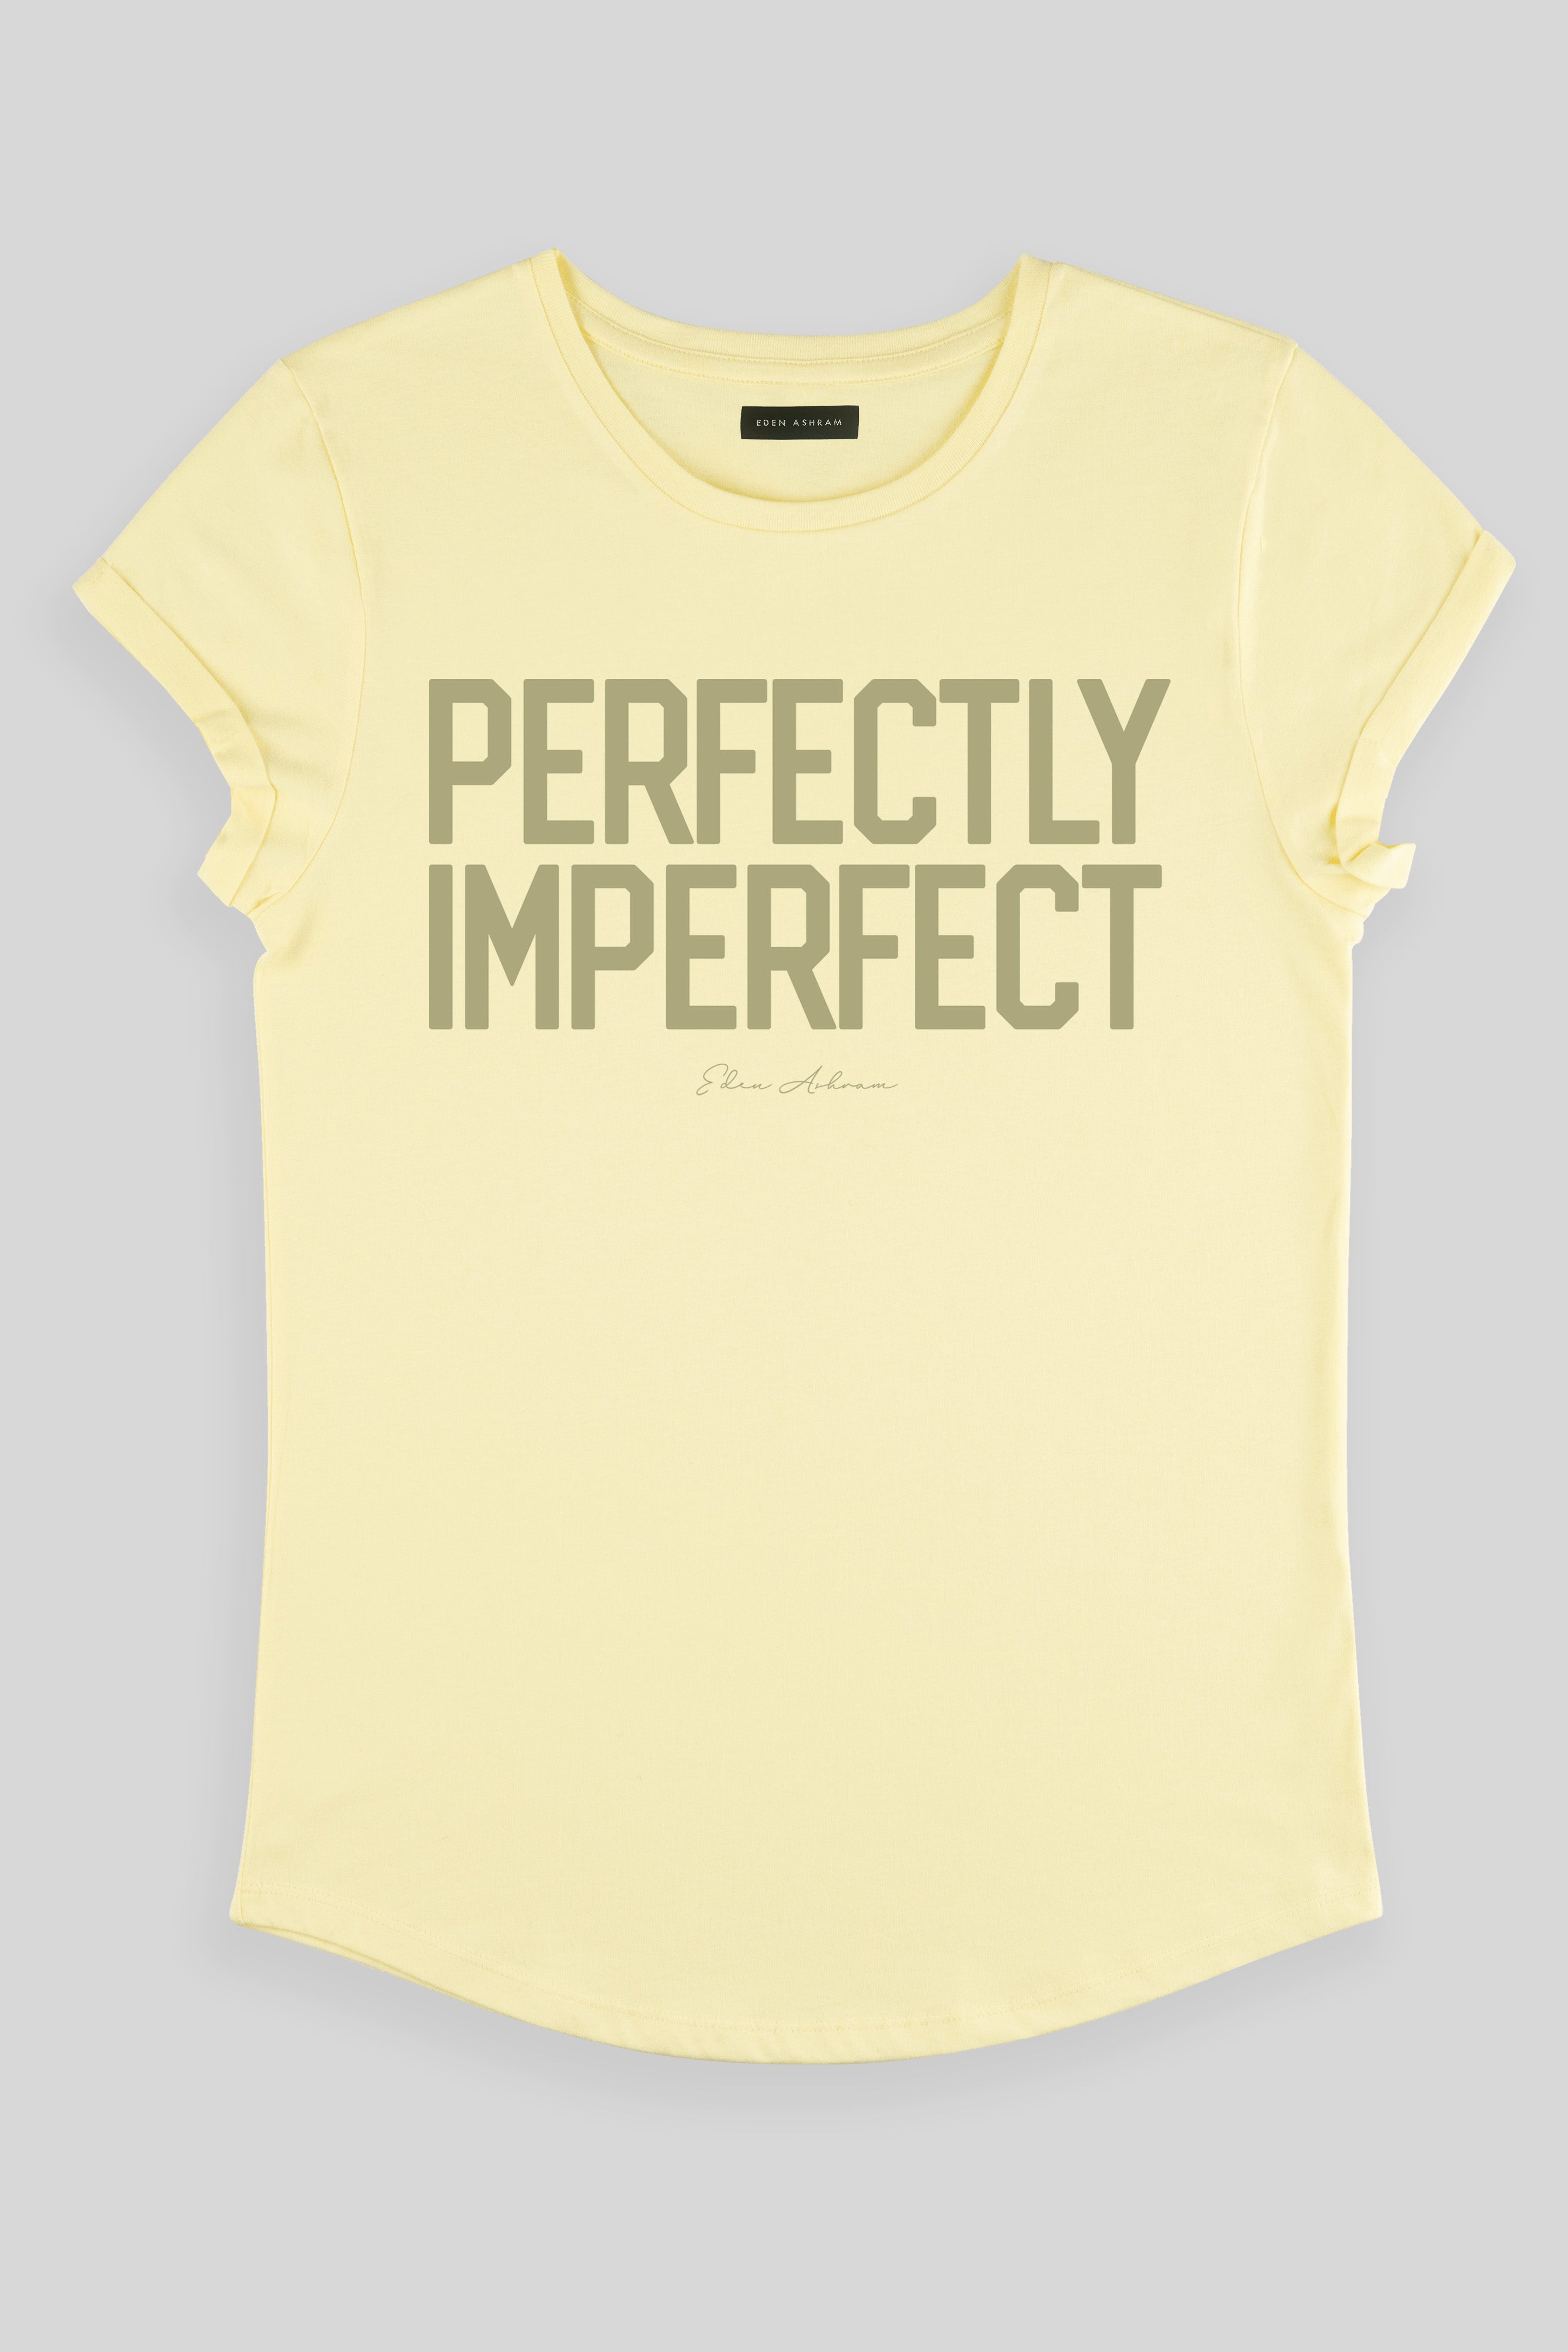 EDEN ASHRAM Perfectly Imperfect Rolled Sleeve T-Shirt Lemon